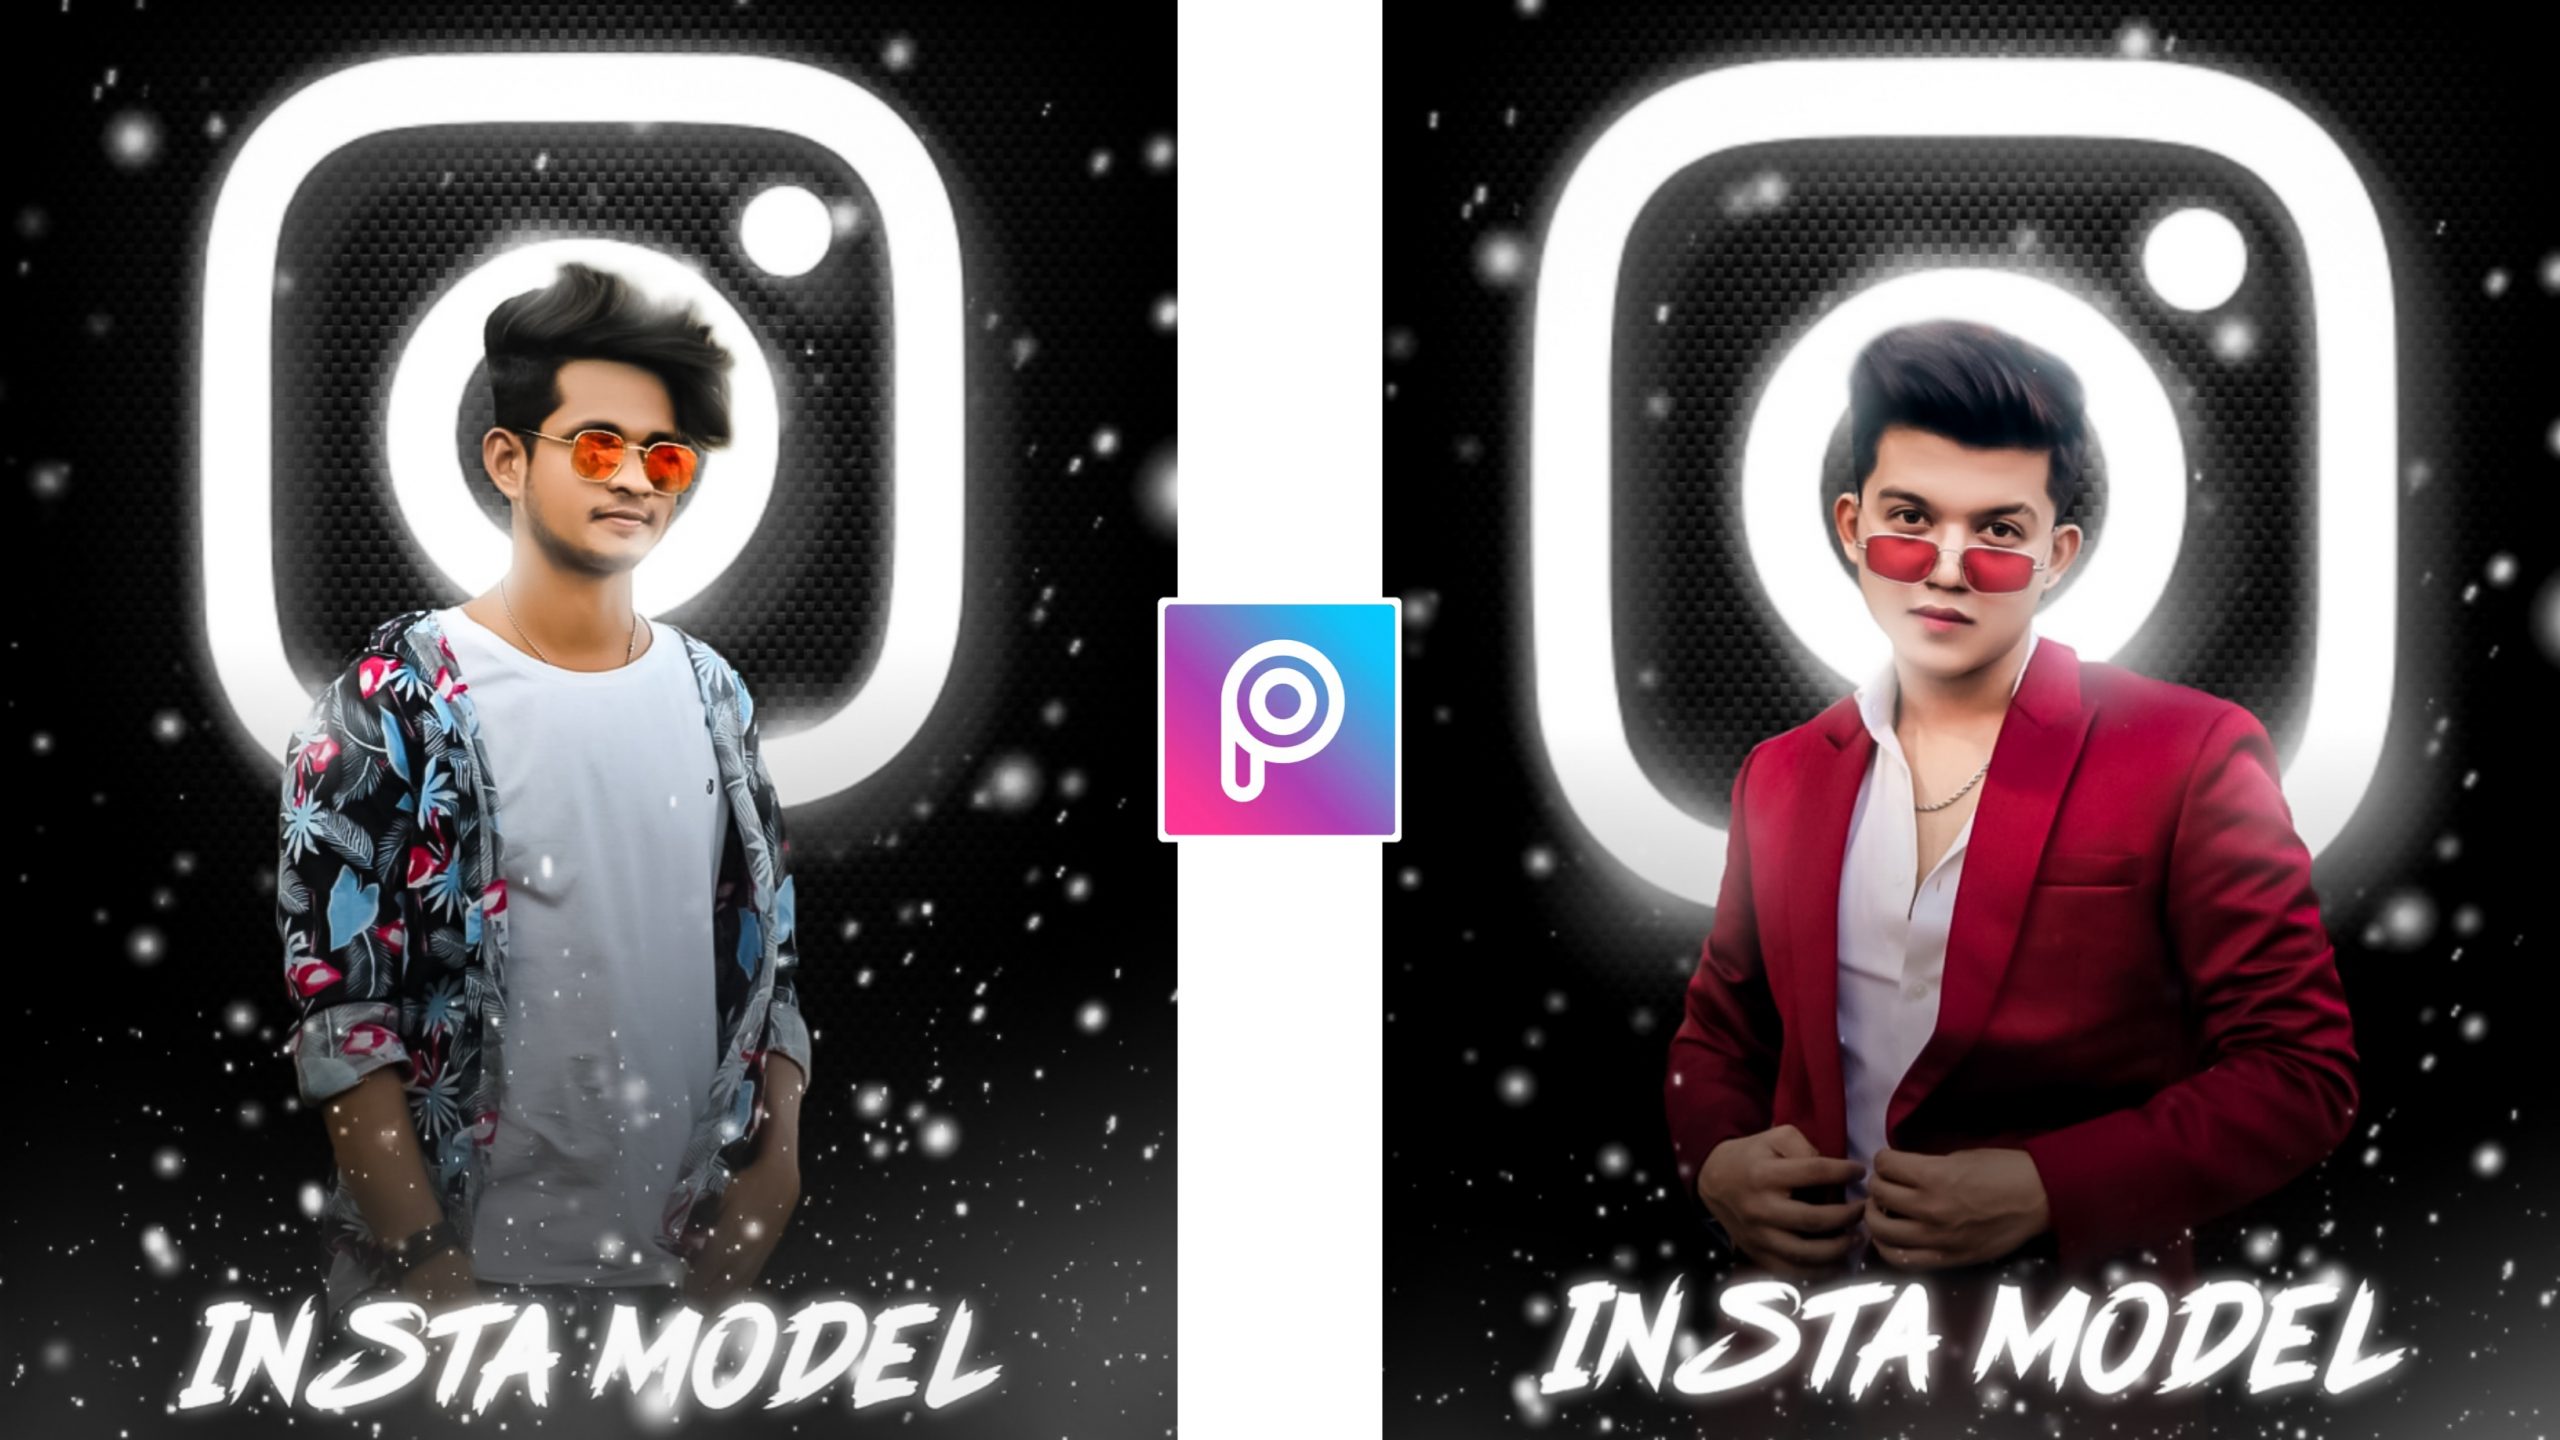 PicsArt Instagram glowing Photo Editing  Png  Background Download   CrazyTipsorg